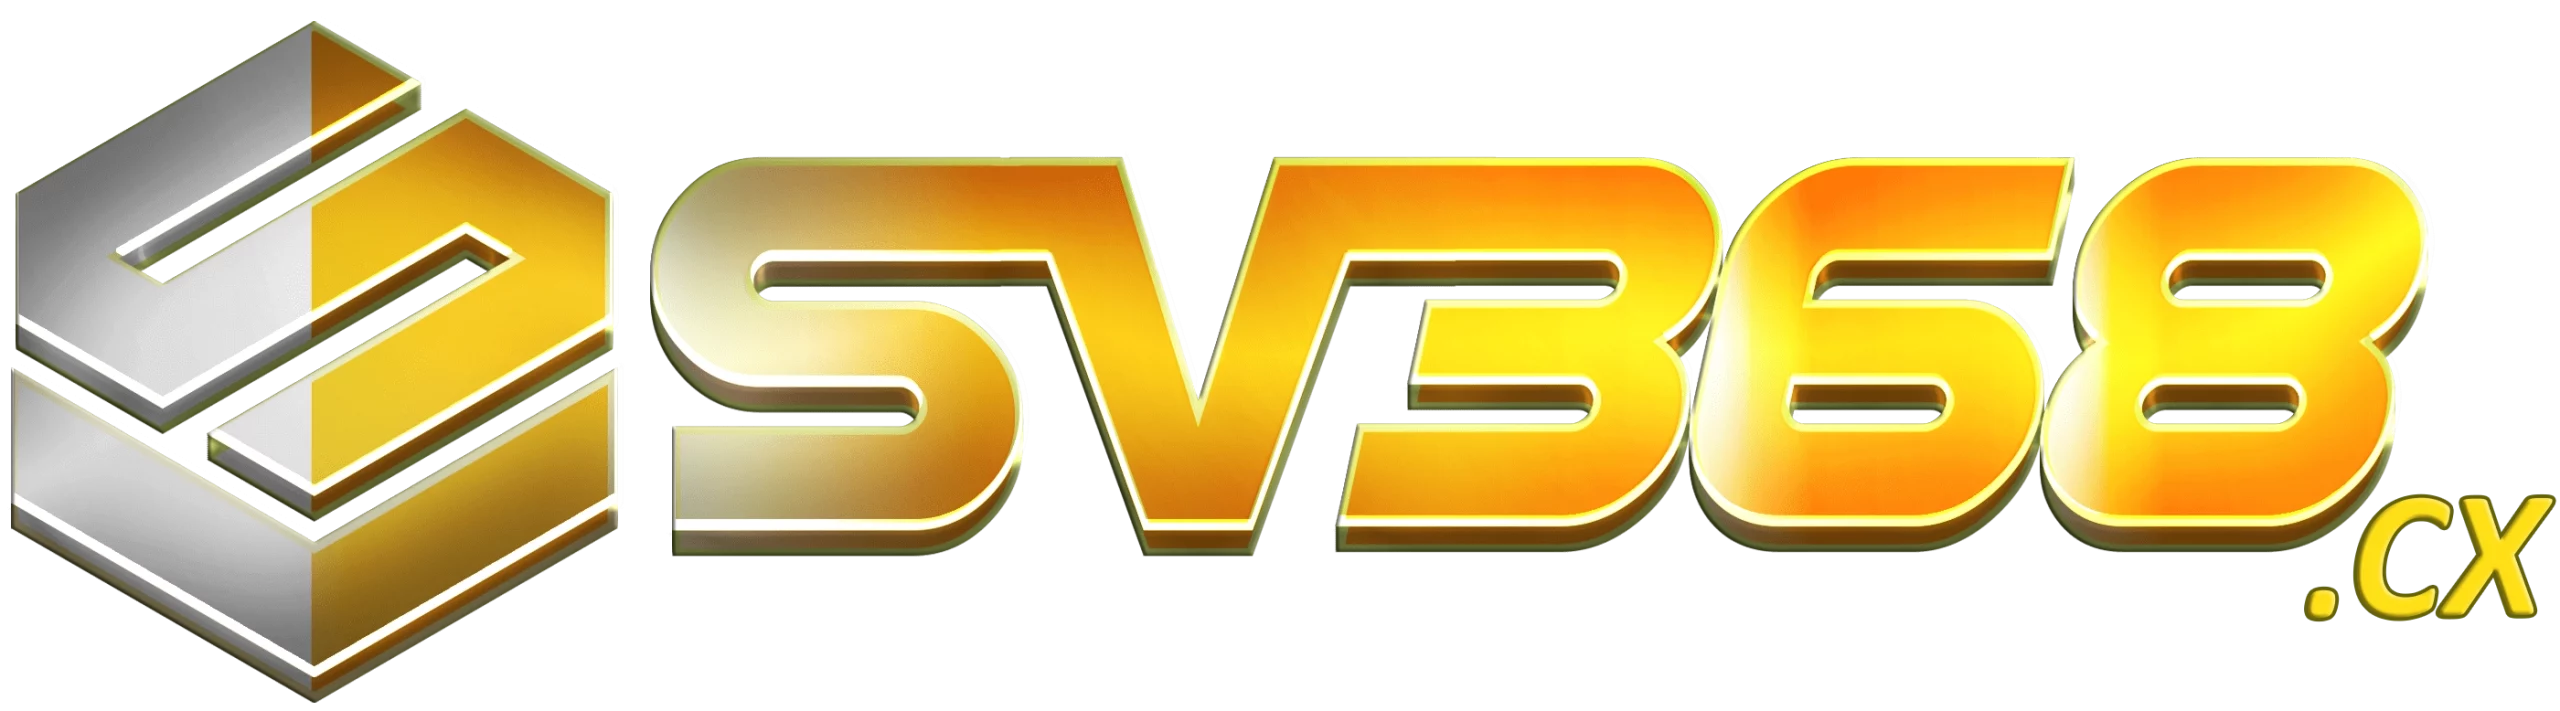 logo-sv368.cx